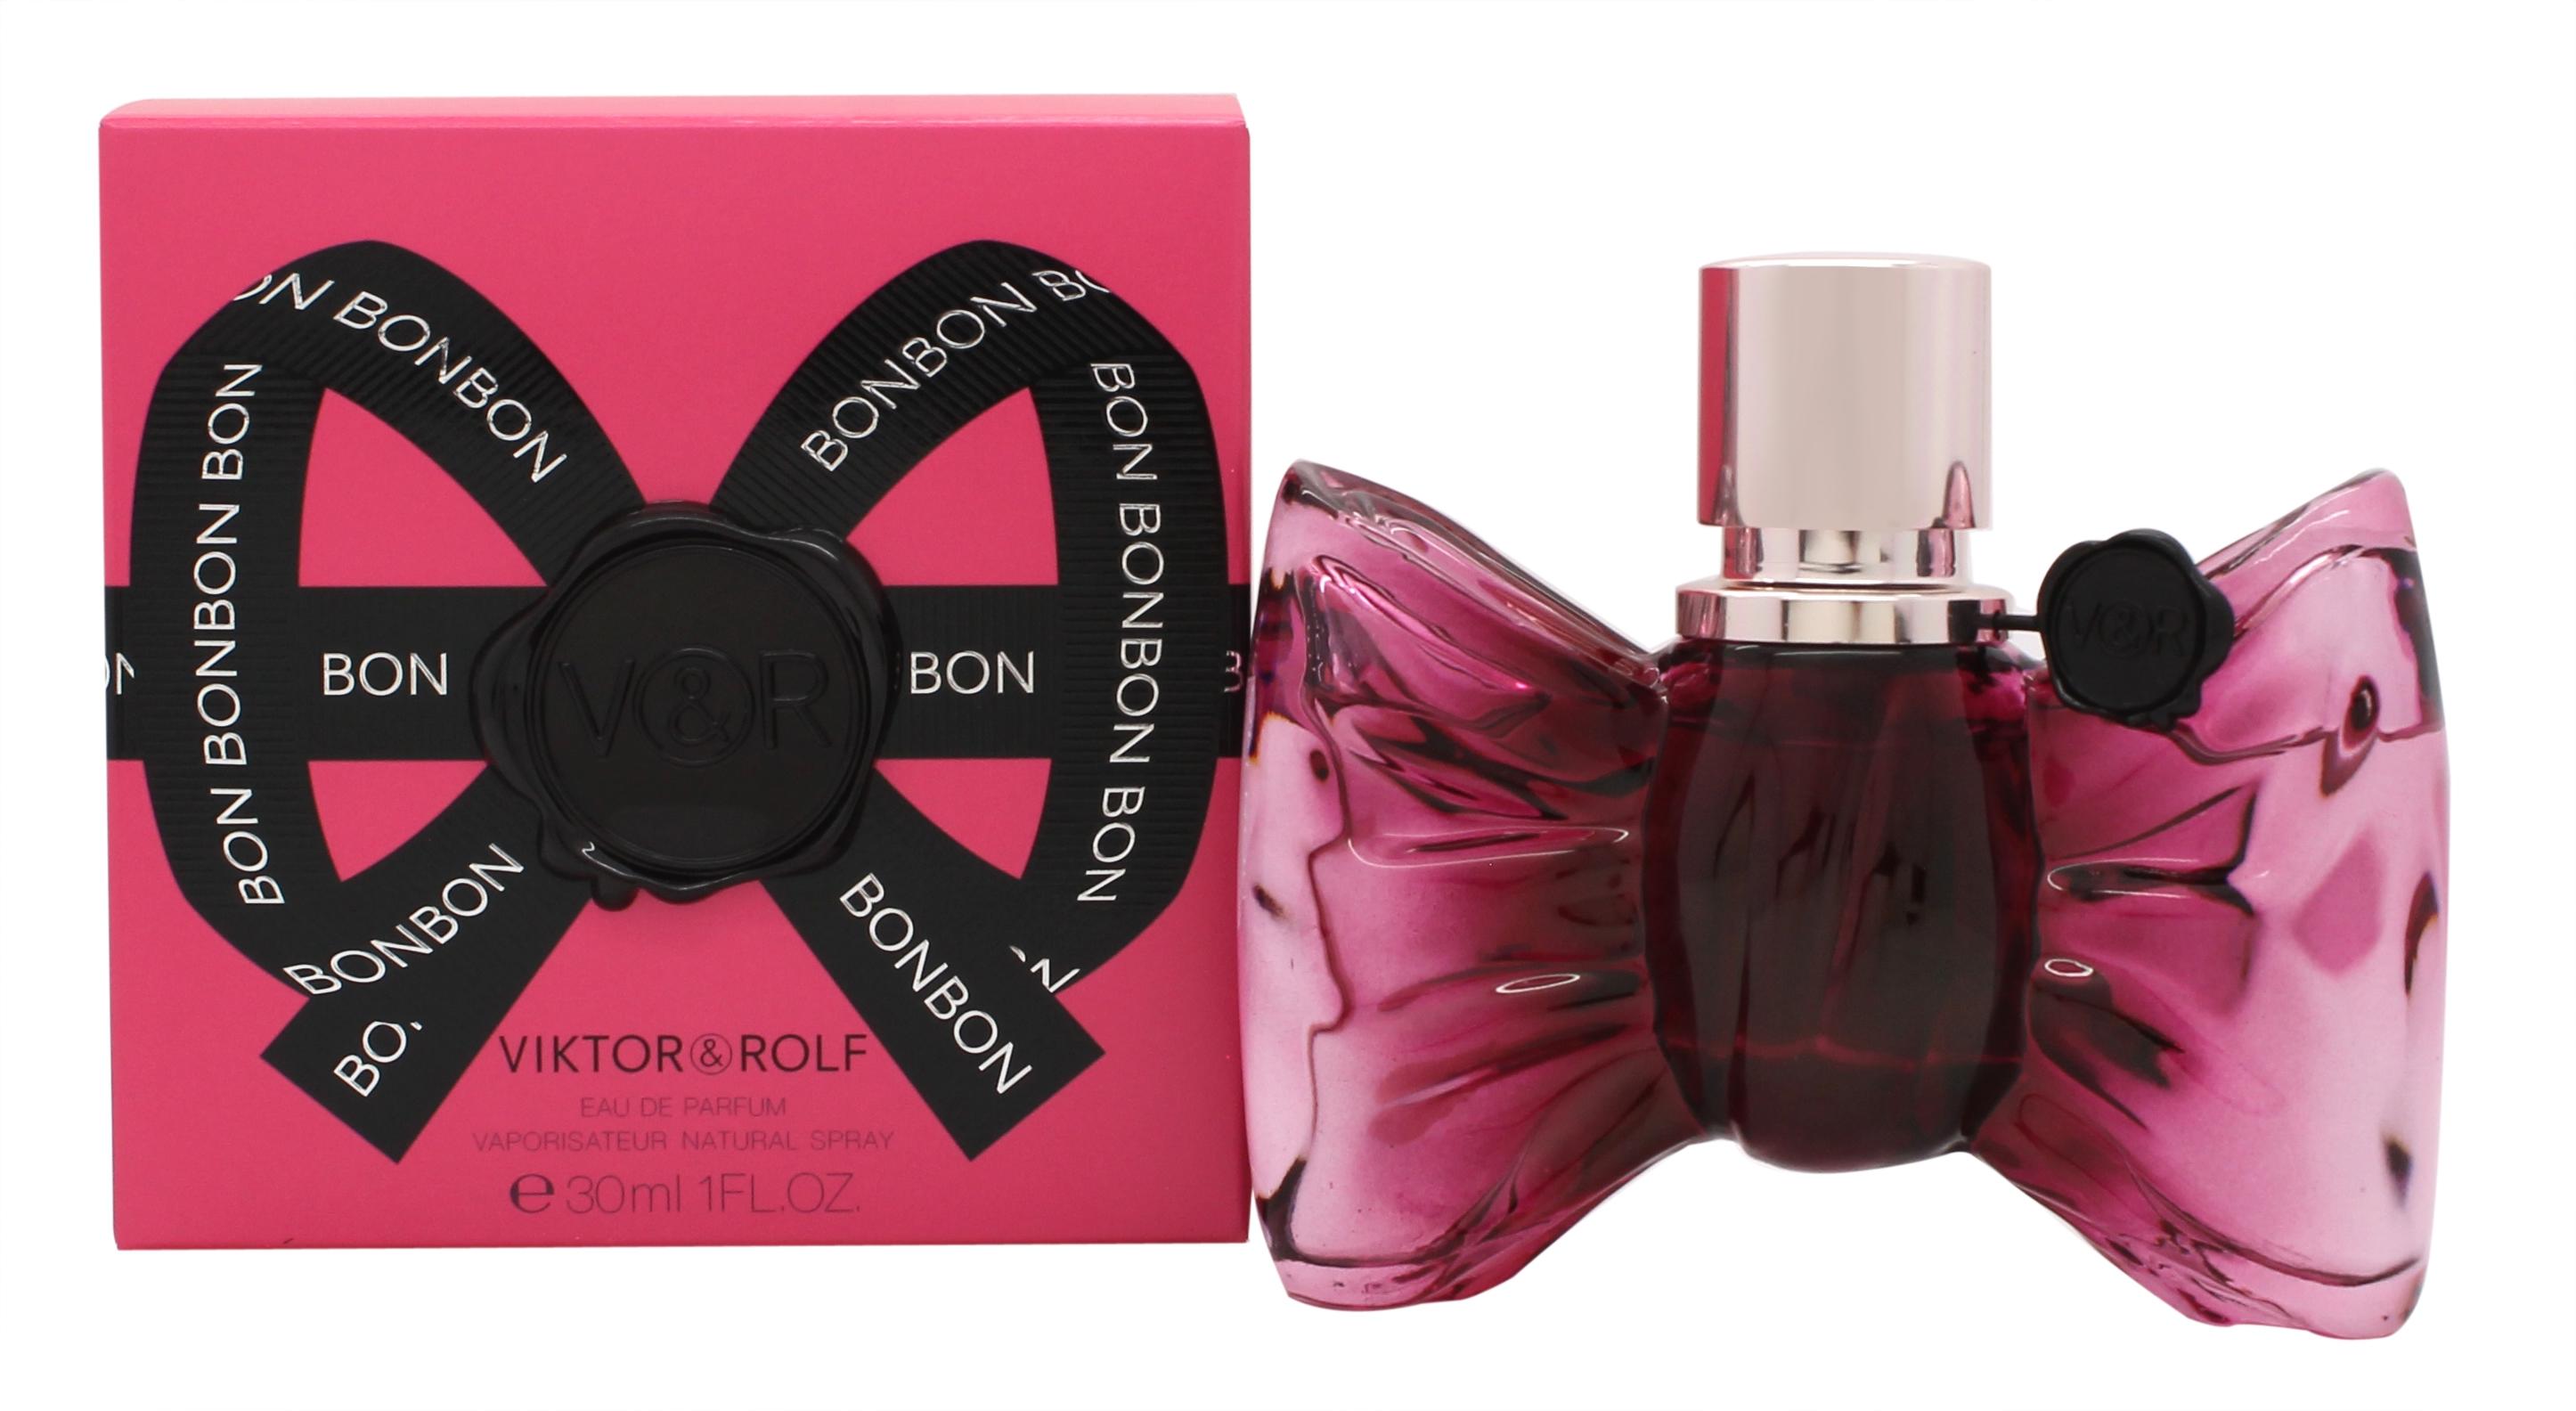 Viktor & Rolf Bonbon Eau de Parfum 30ml Spray